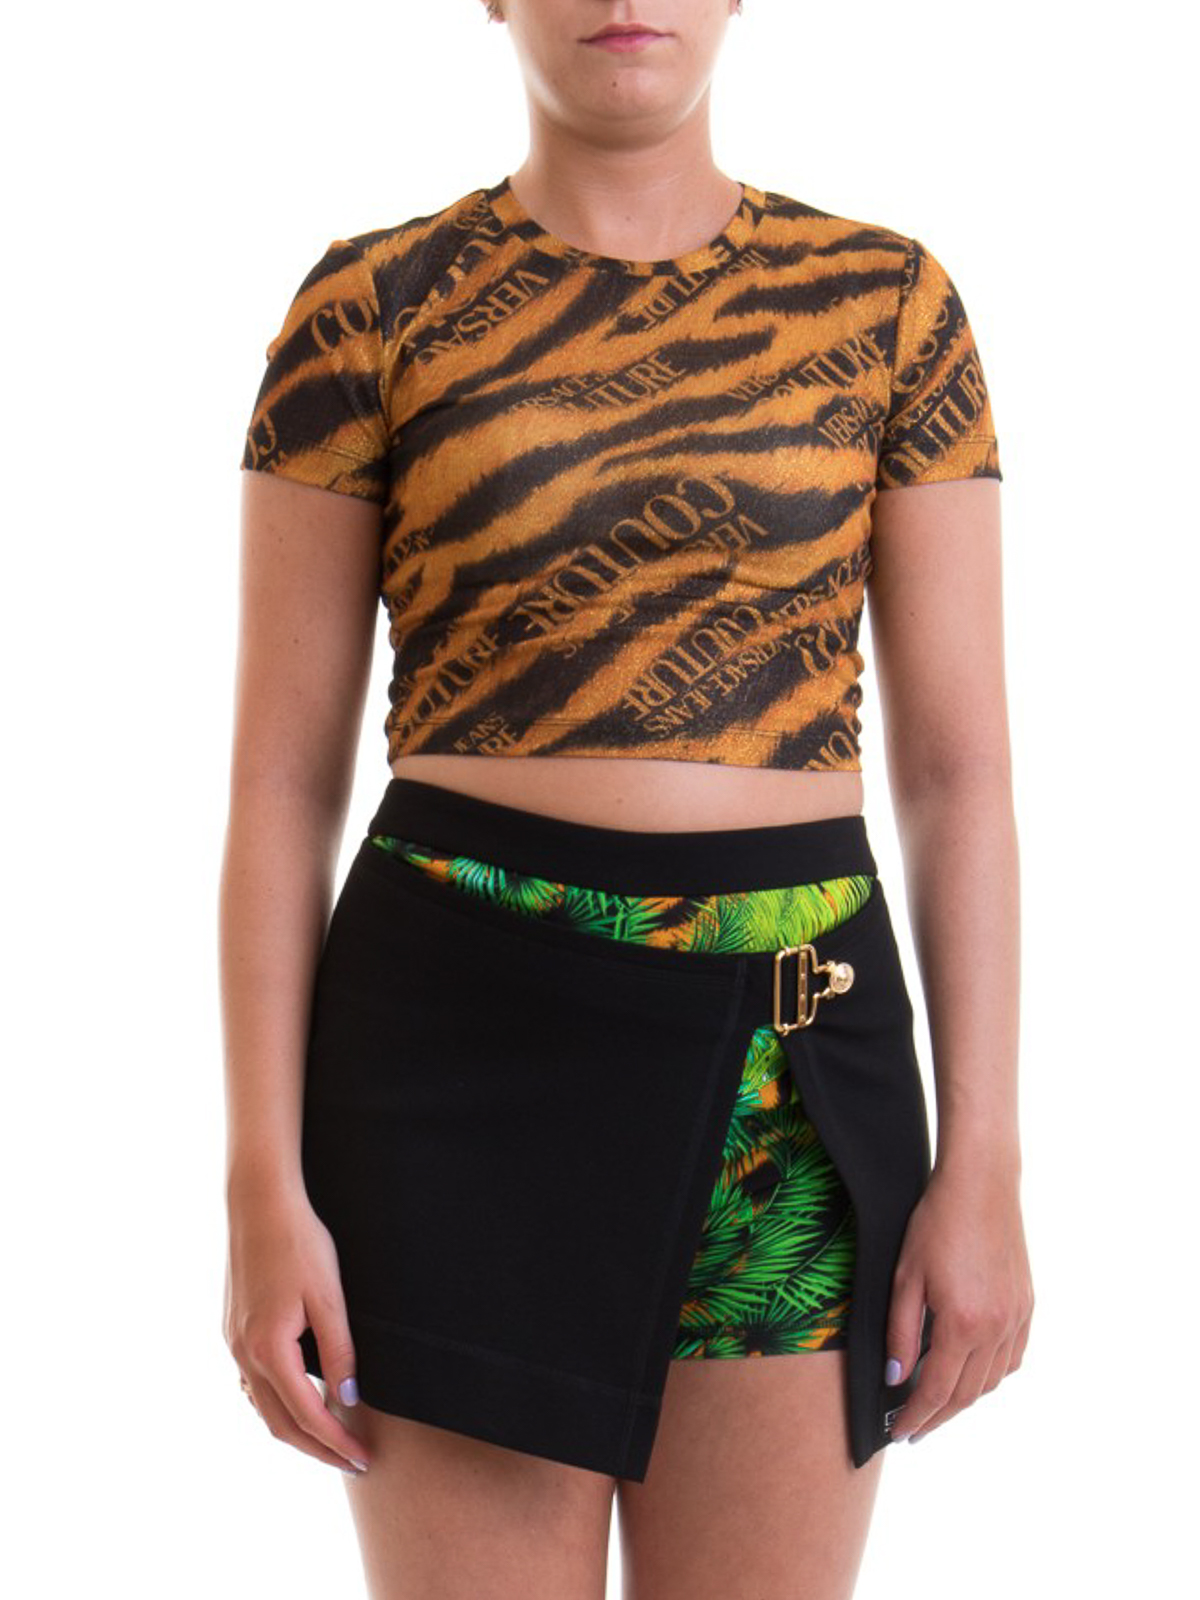 versace tiger t shirt